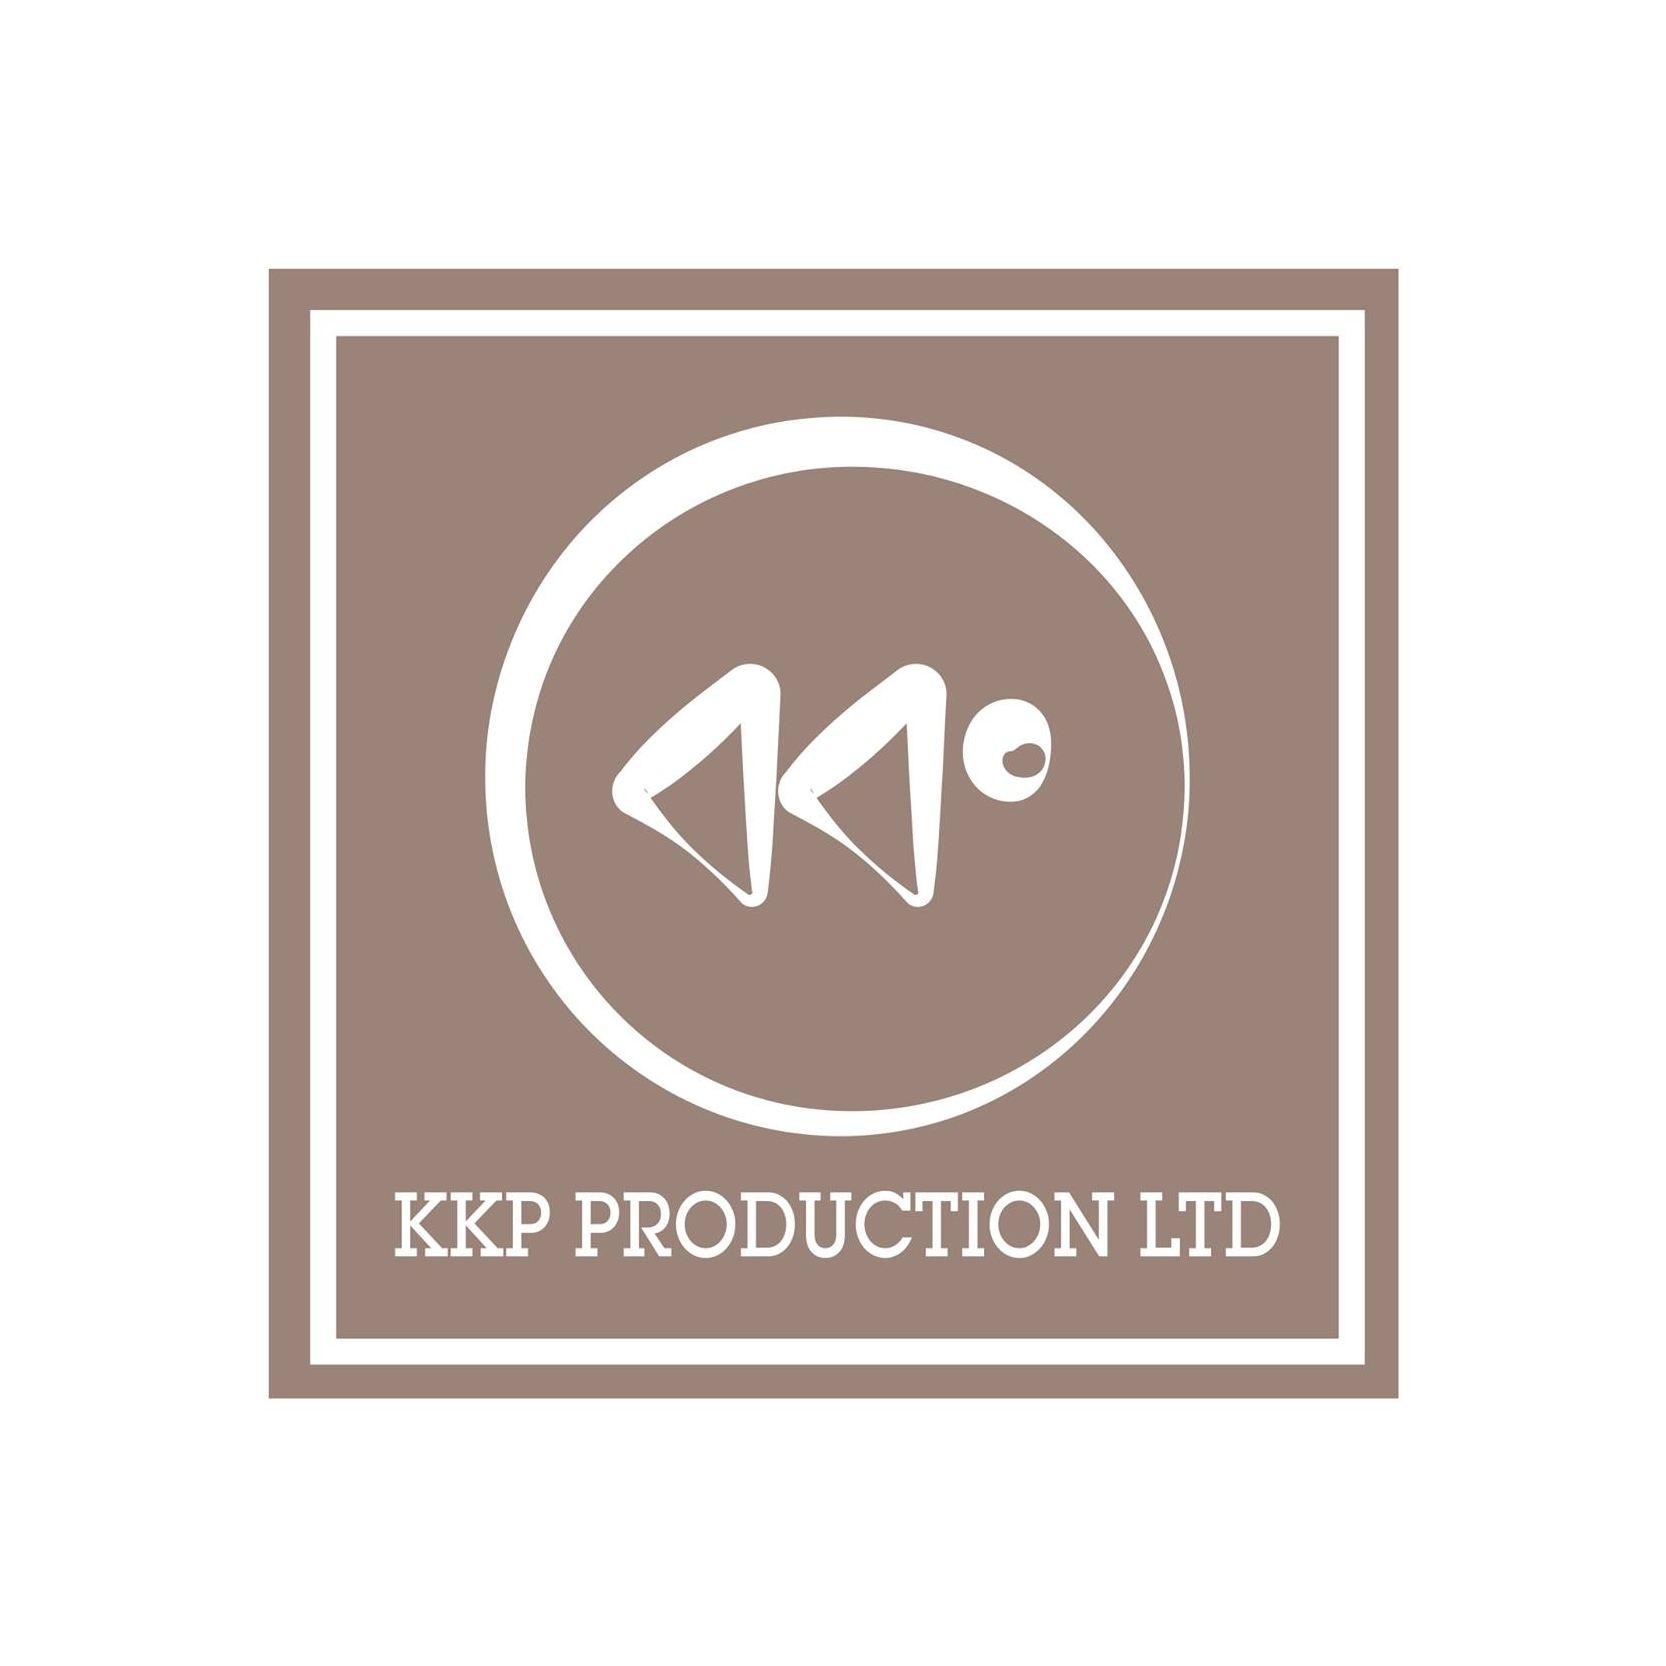 KKP Production Limited